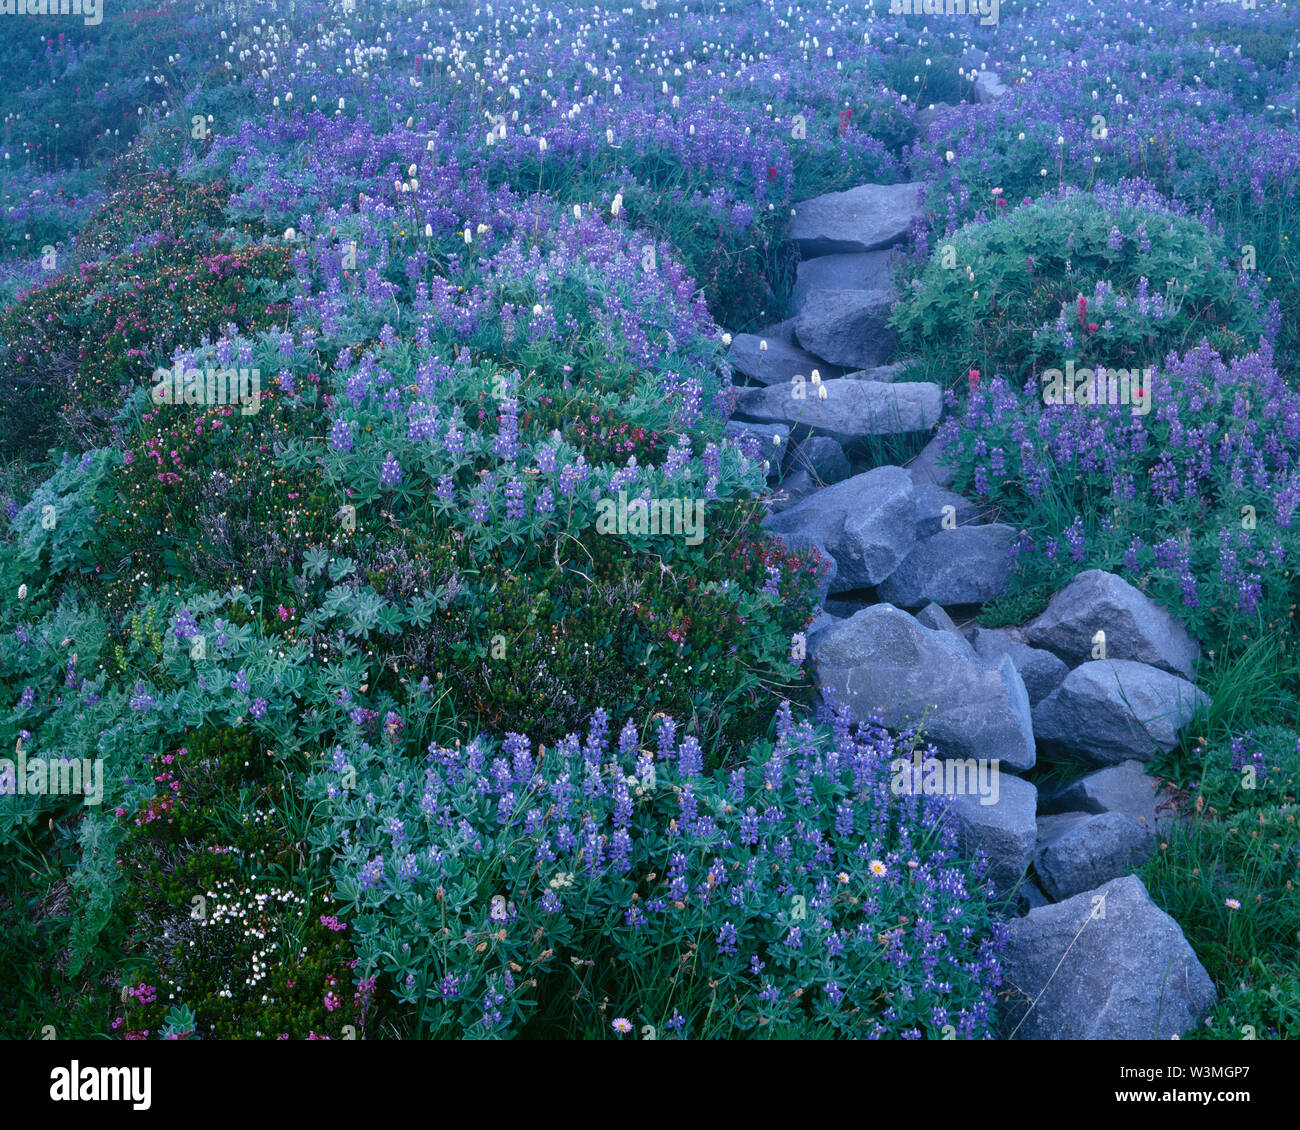 USA, Washington, Mt. Rainier National Park, Fog softens meadow of: lupine, bistort, heather, paintbrush and fleabane with descending rocks. Stock Photo